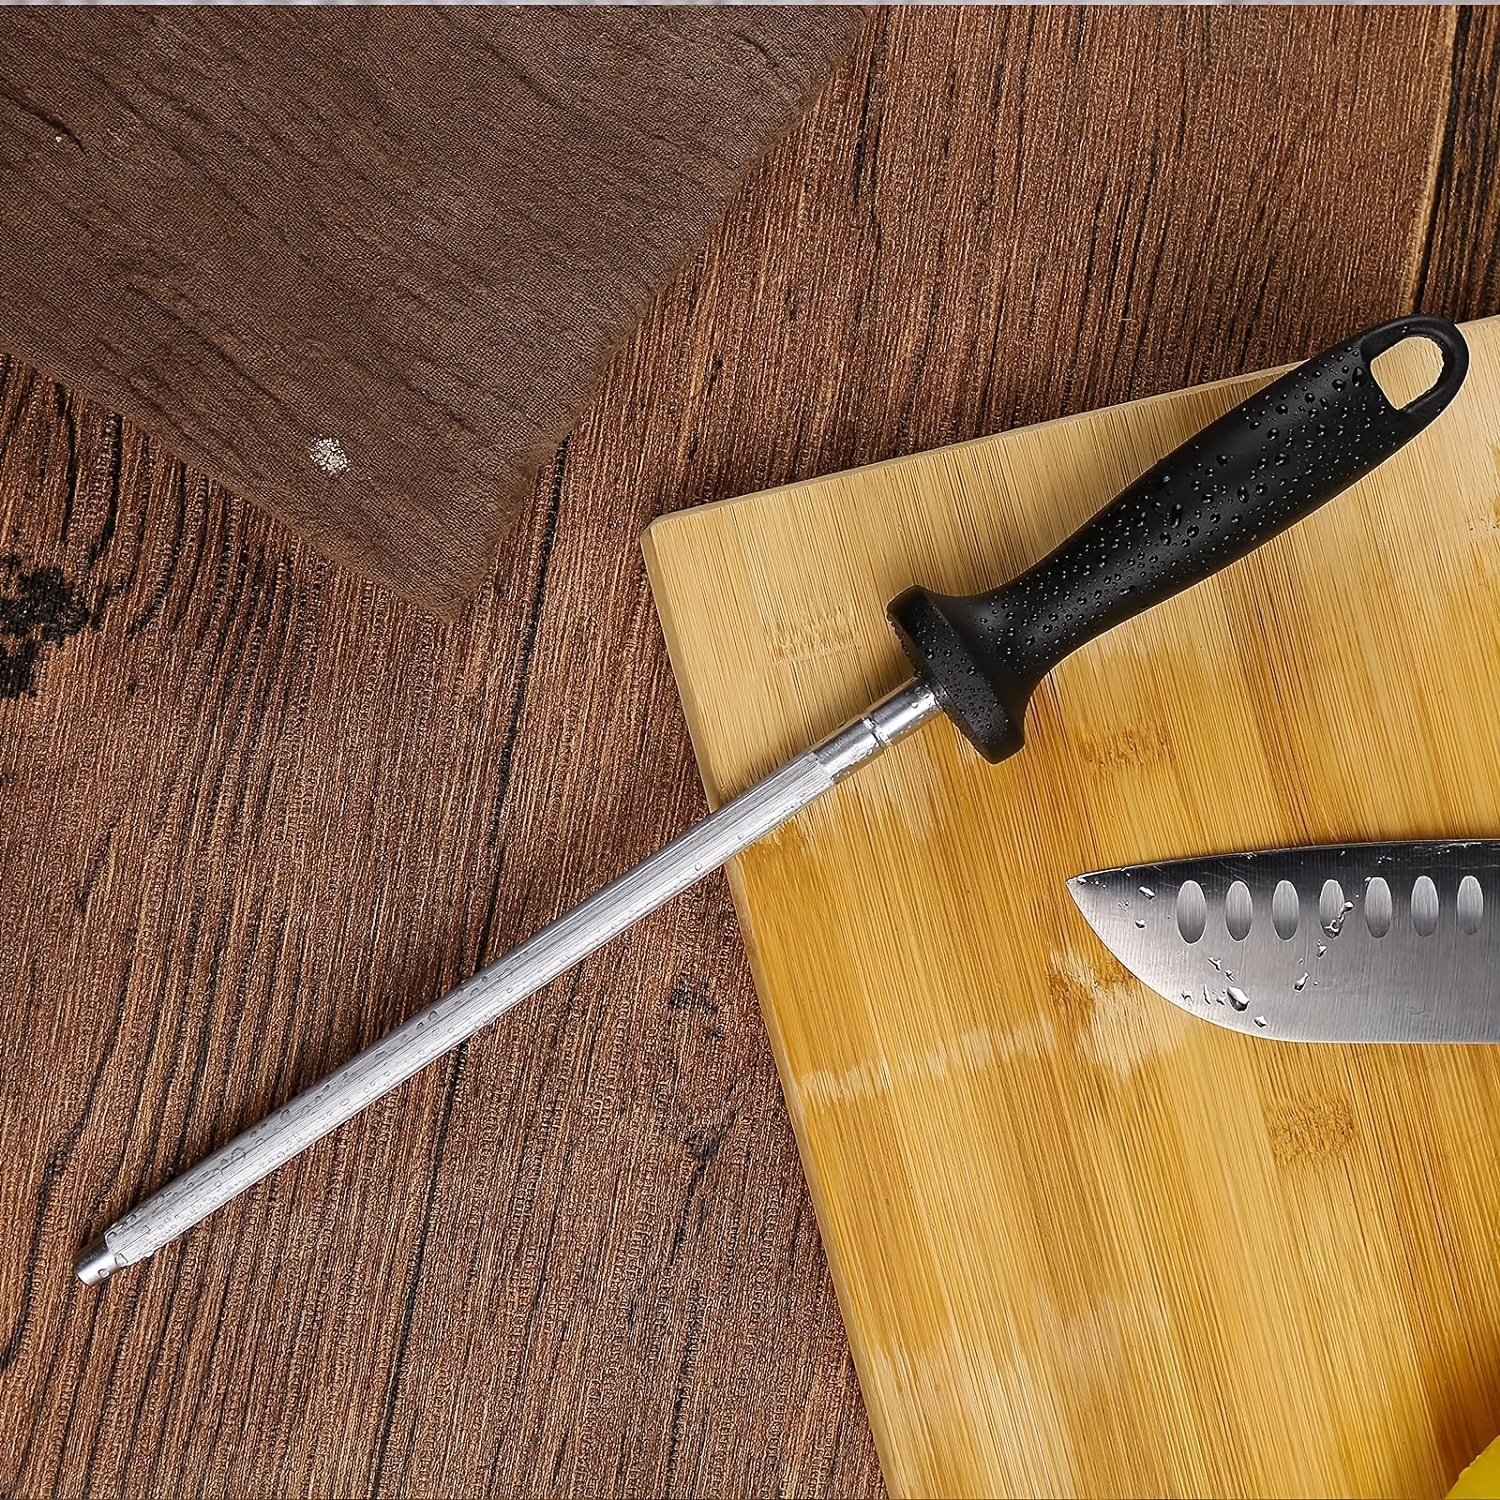 Honing Steel 9.5 Professional Chef Knife Sharpener Rod Sharpening